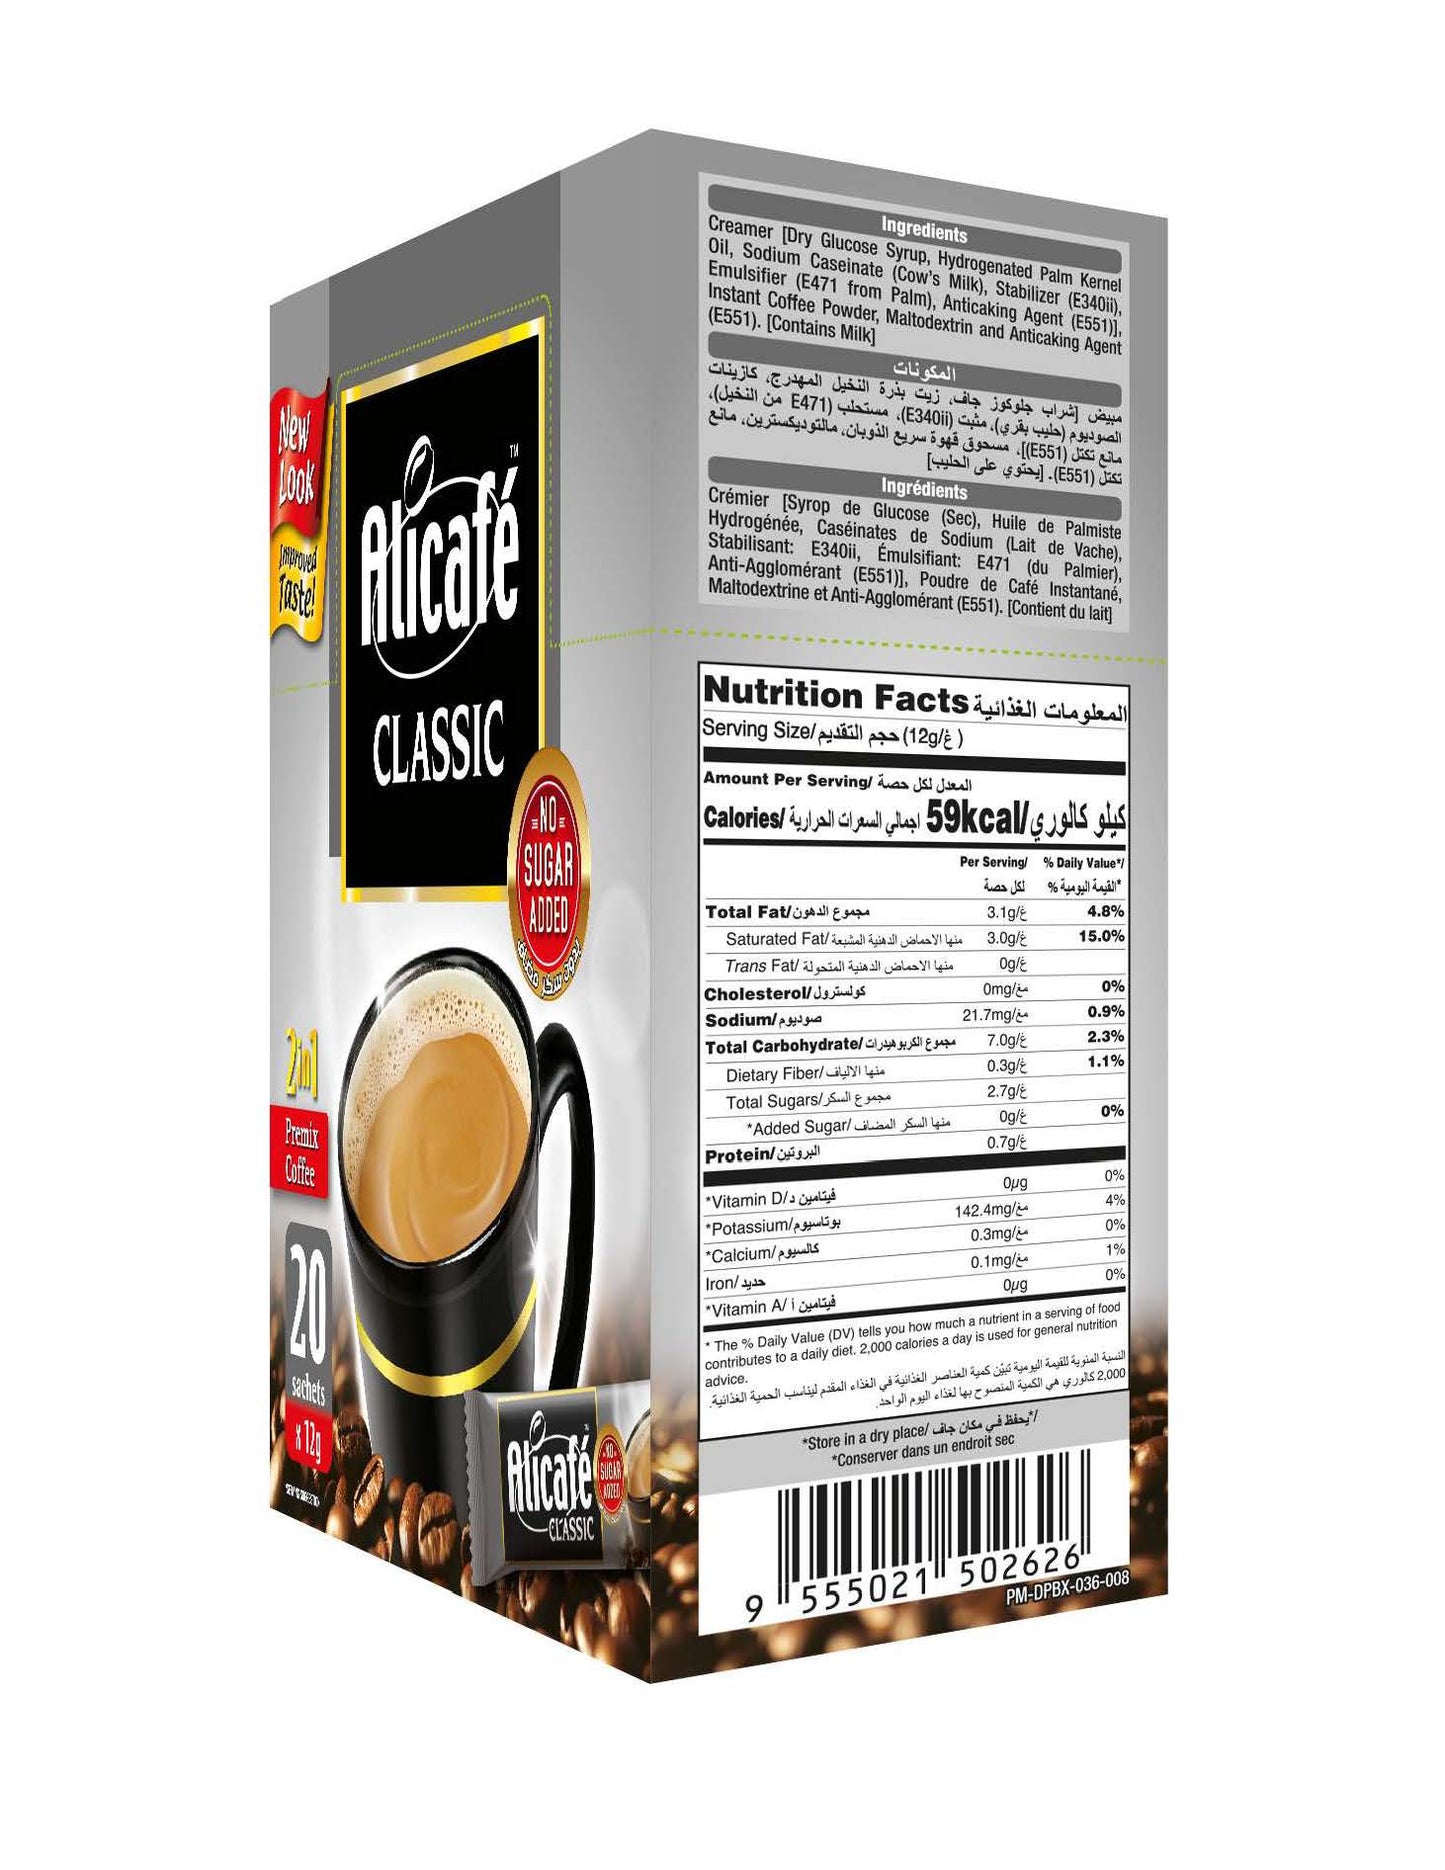 Alicafé Classic 2in1 Sugar Free Instant Coffee Box 12g (12 Sticks)